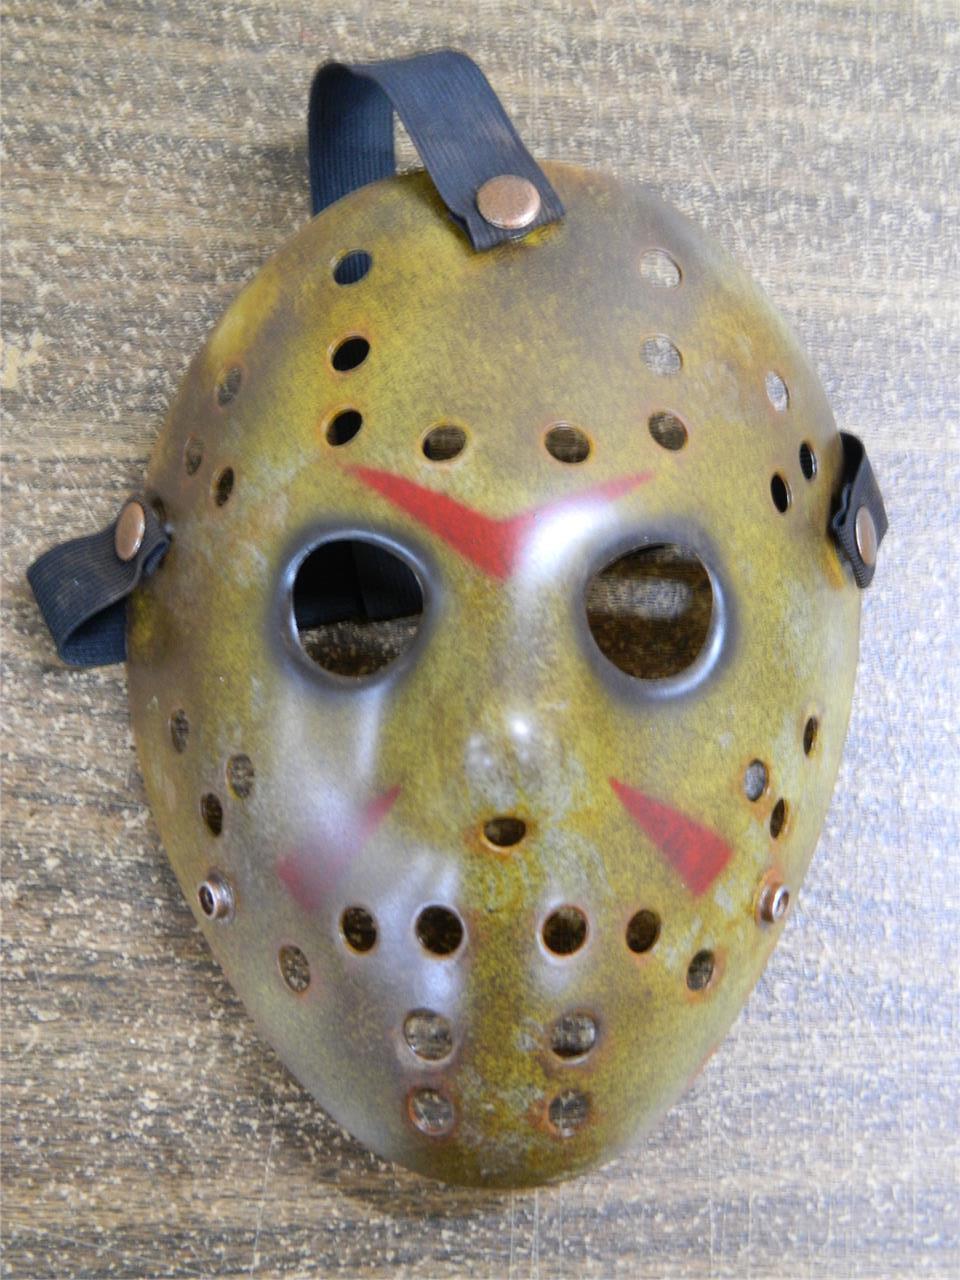   Adult HORROR MOVIE MASK - Jason Voorhees Dark Hockey Mask Friday the 13th 